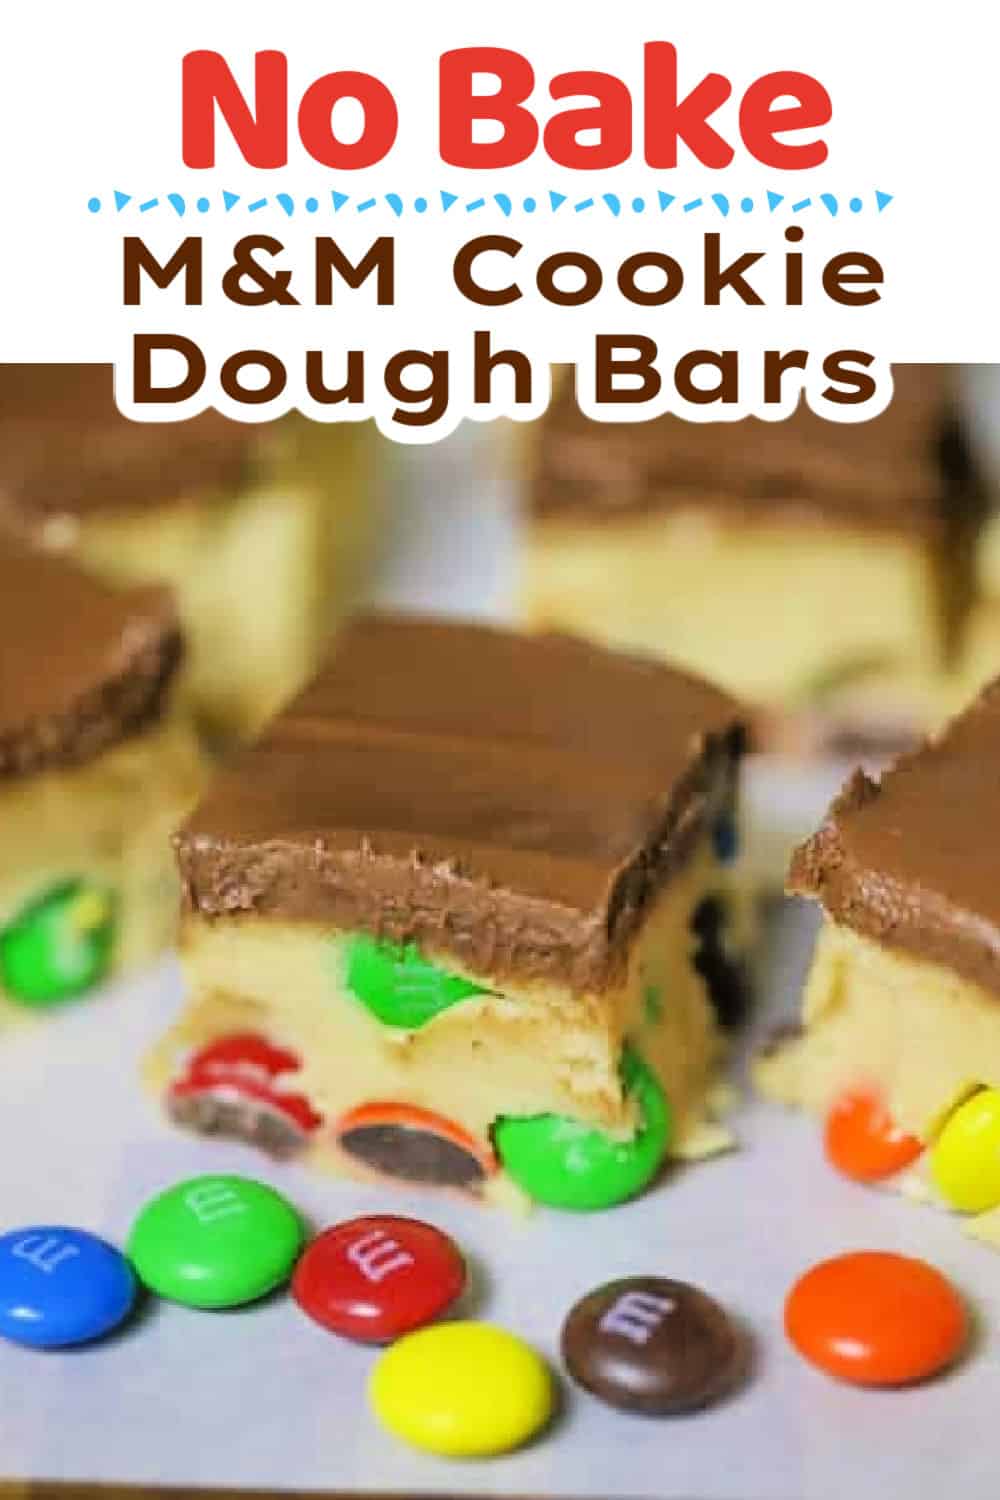 M&M Cookie Dough Bars - No Bake